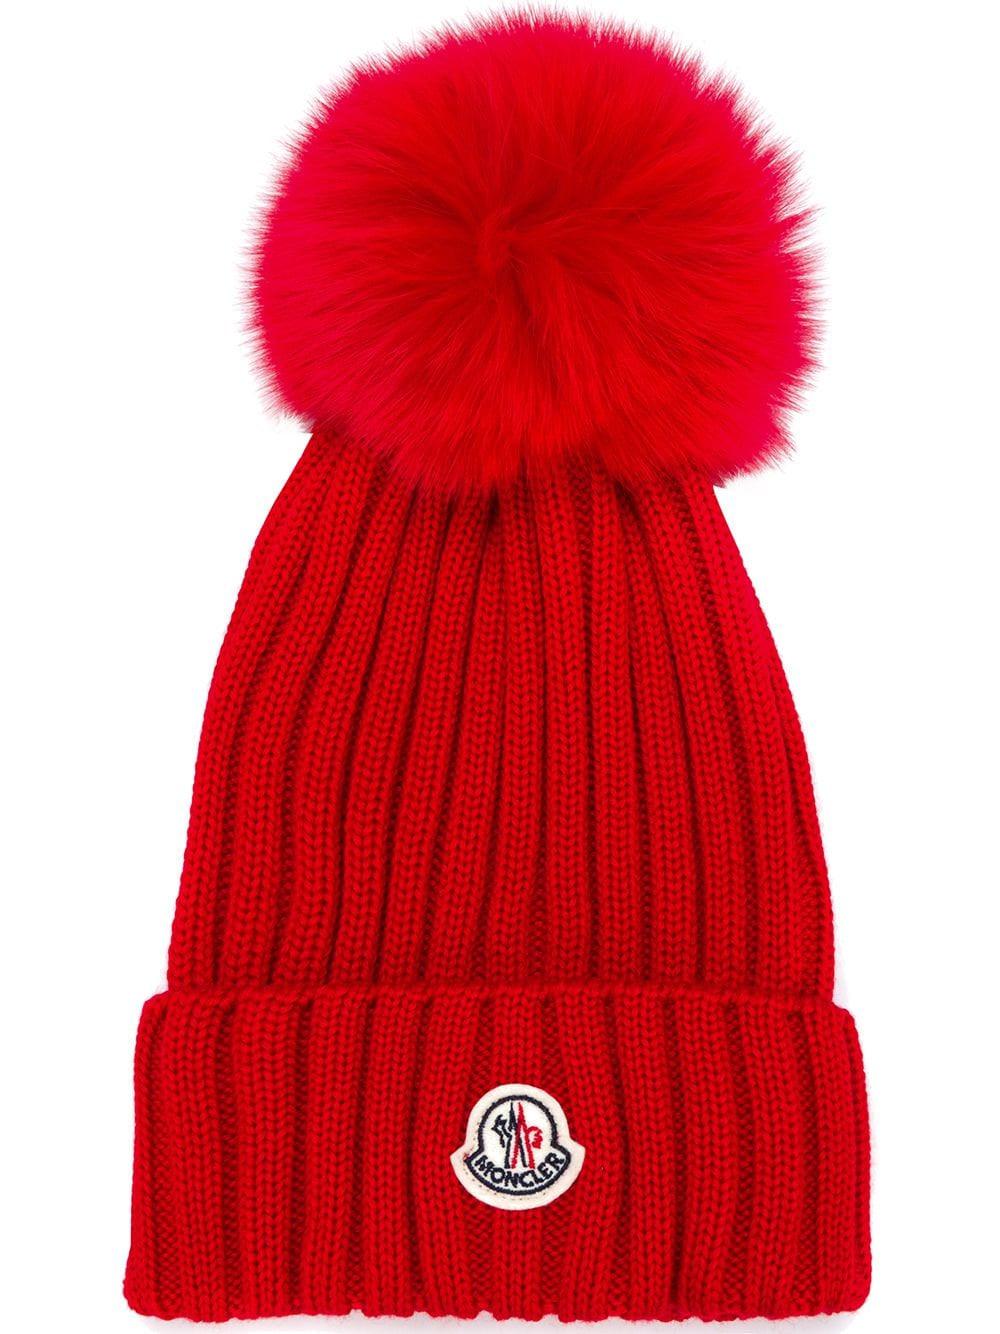 moncler red hat